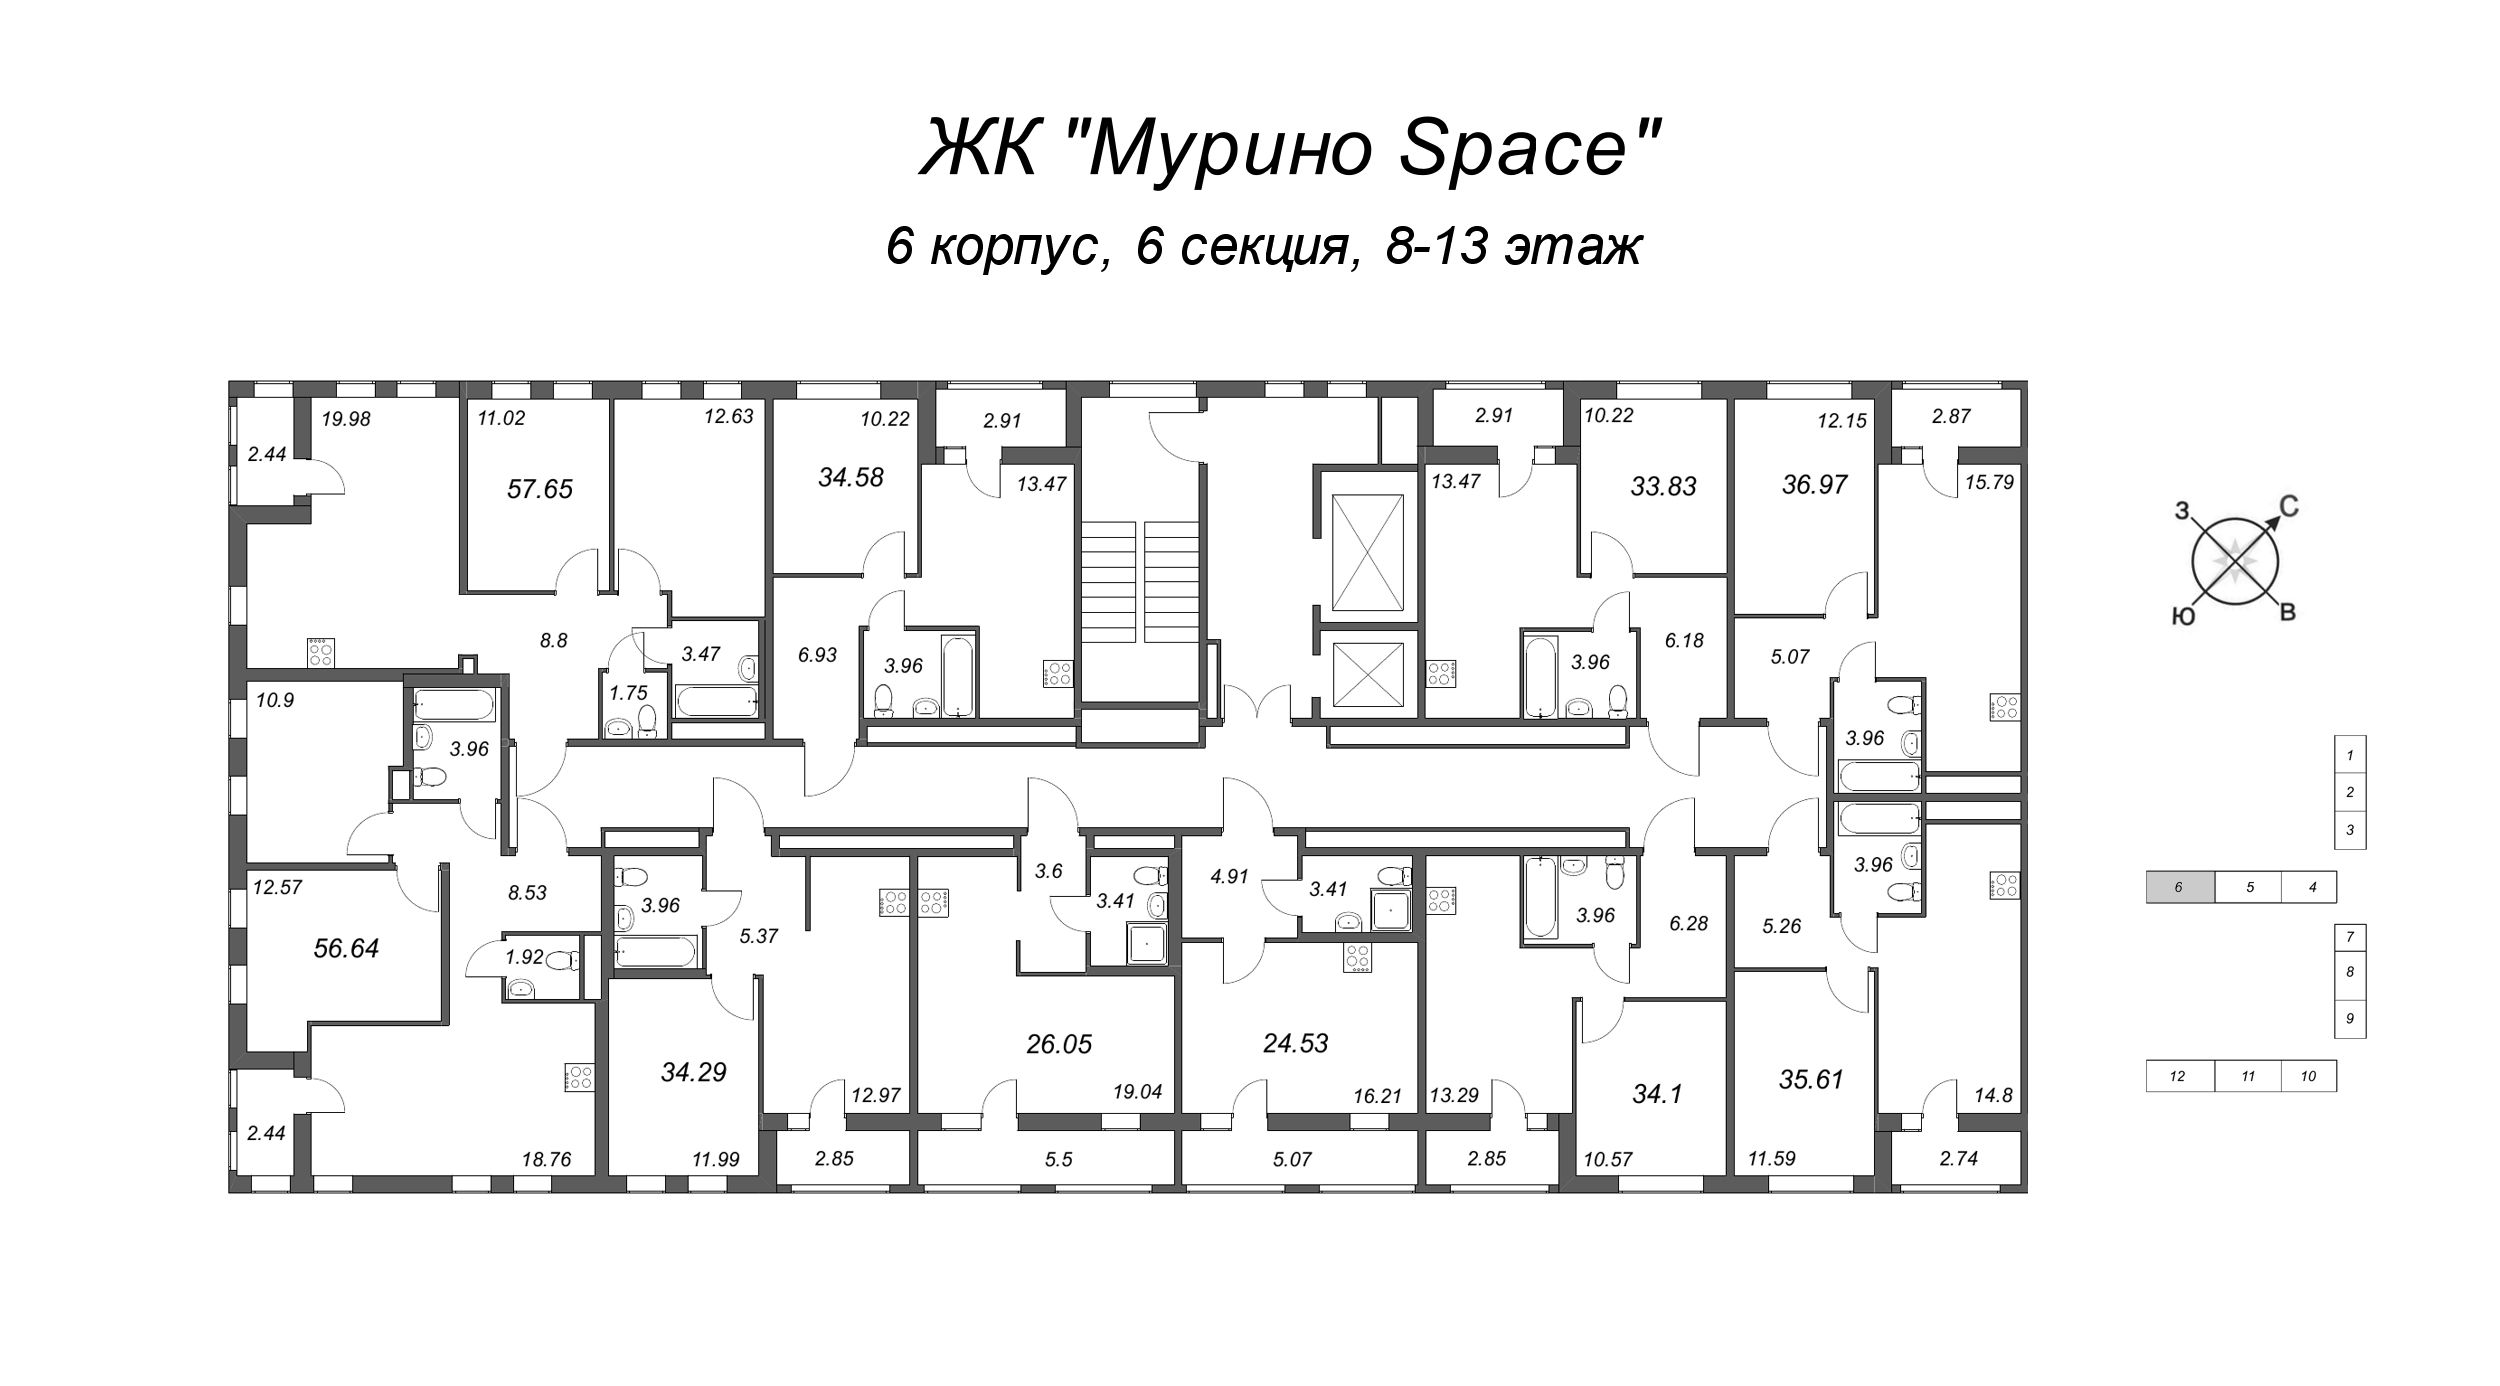 2-комнатная (Евро) квартира, 33.83 м² в ЖК "Мурино Space" - планировка этажа